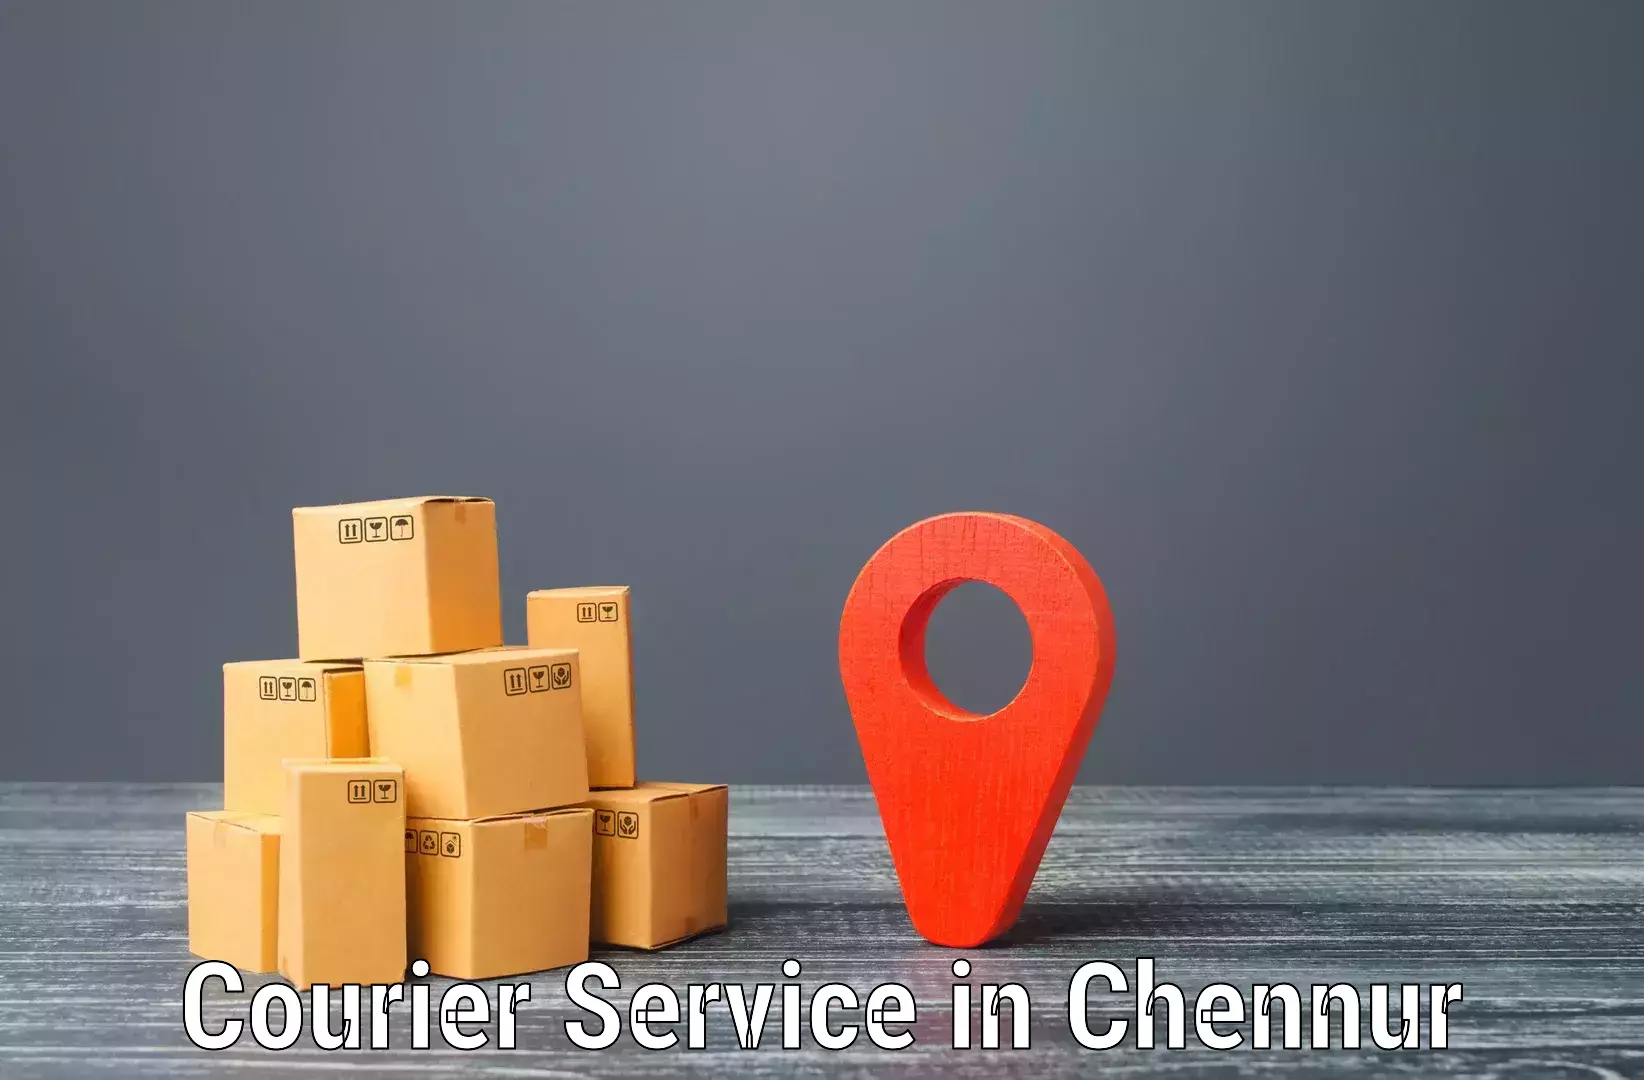 Comprehensive parcel tracking in Chennur